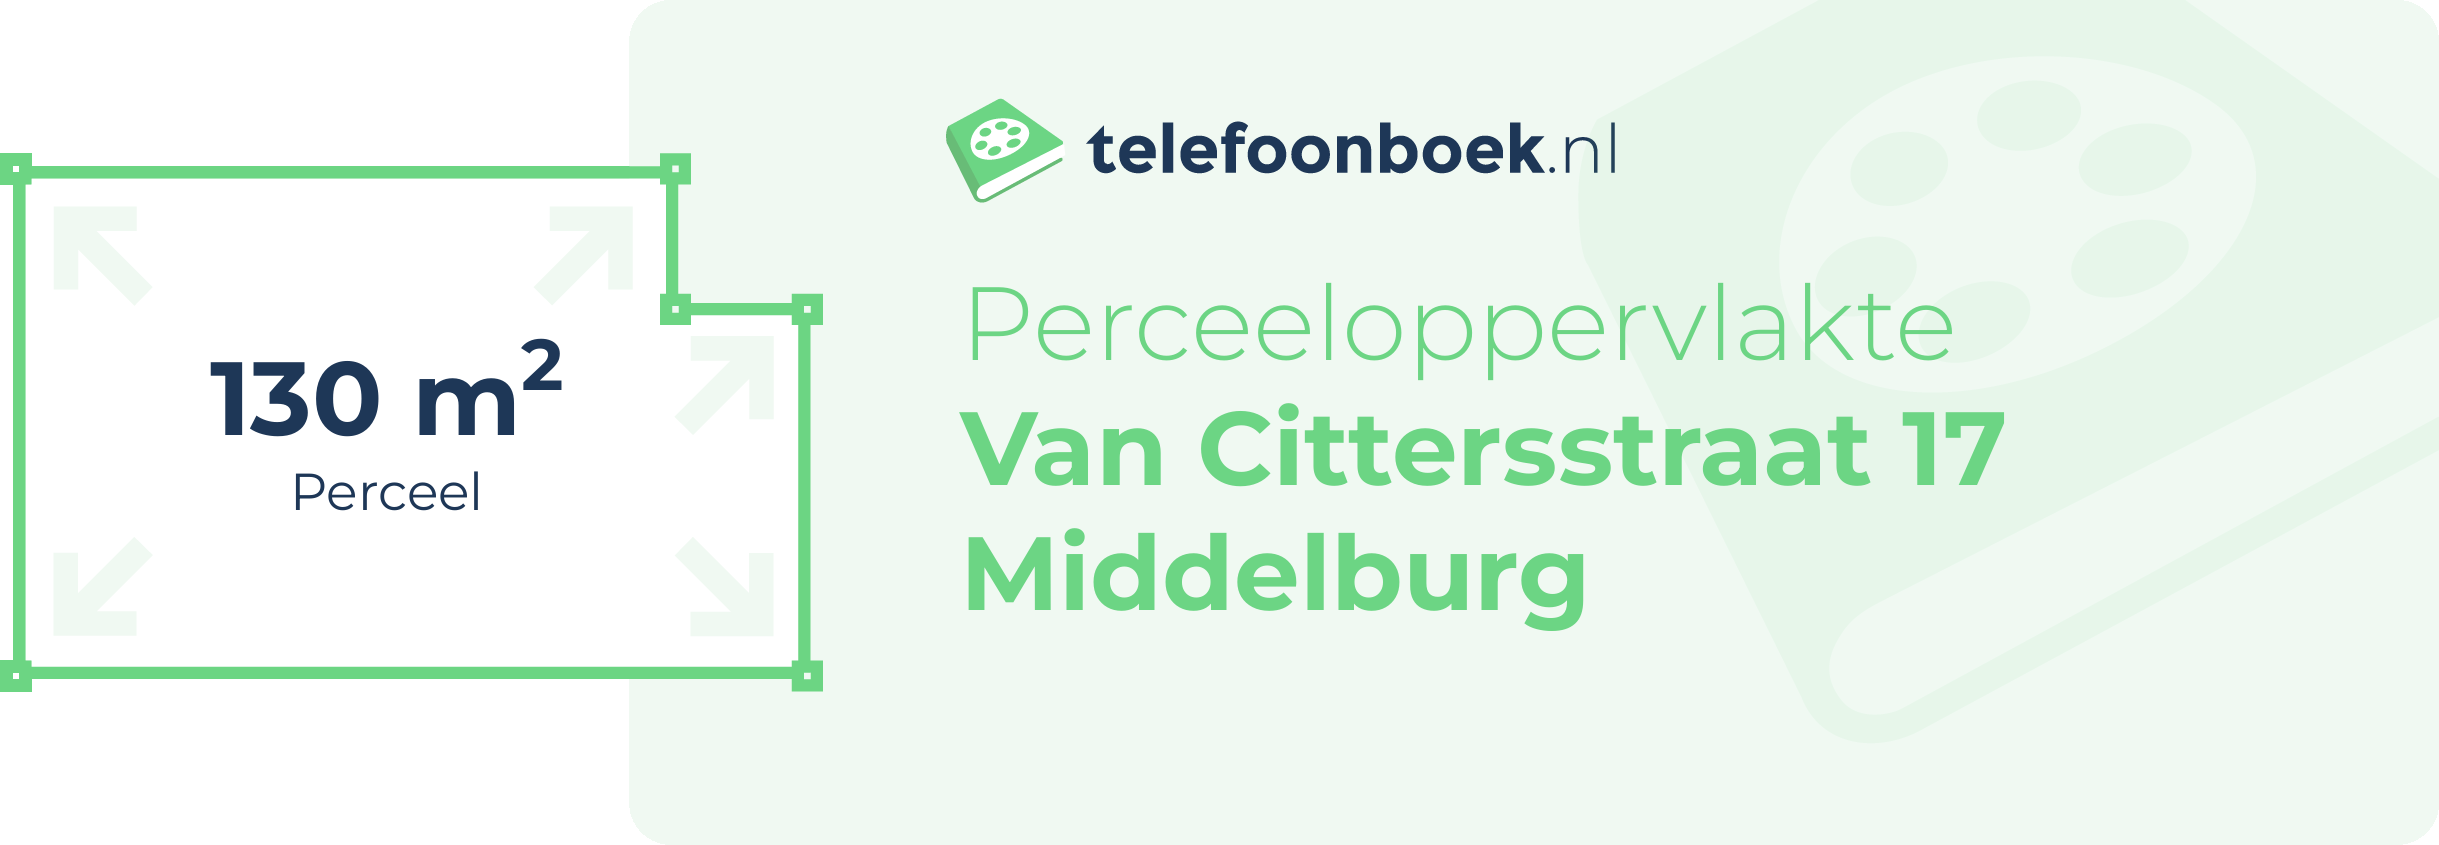 Perceeloppervlakte Van Cittersstraat 17 Middelburg